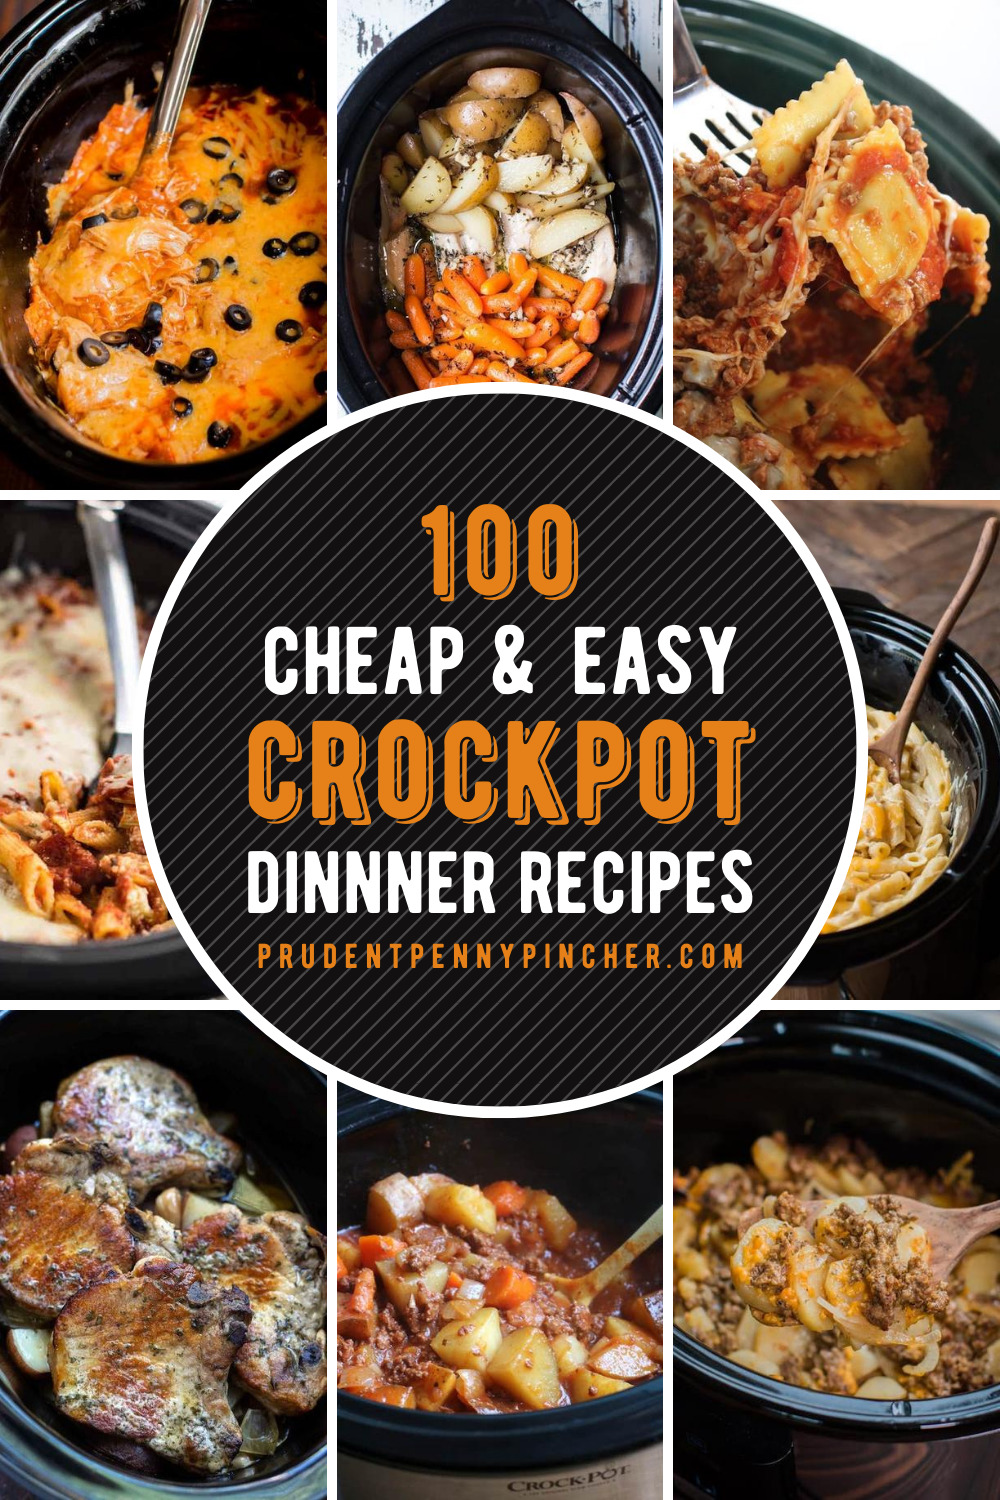 https://www.prudentpennypincher.com/wp-content/uploads/2020/07/cheap-easy-crockpot-recipes-1.jpg